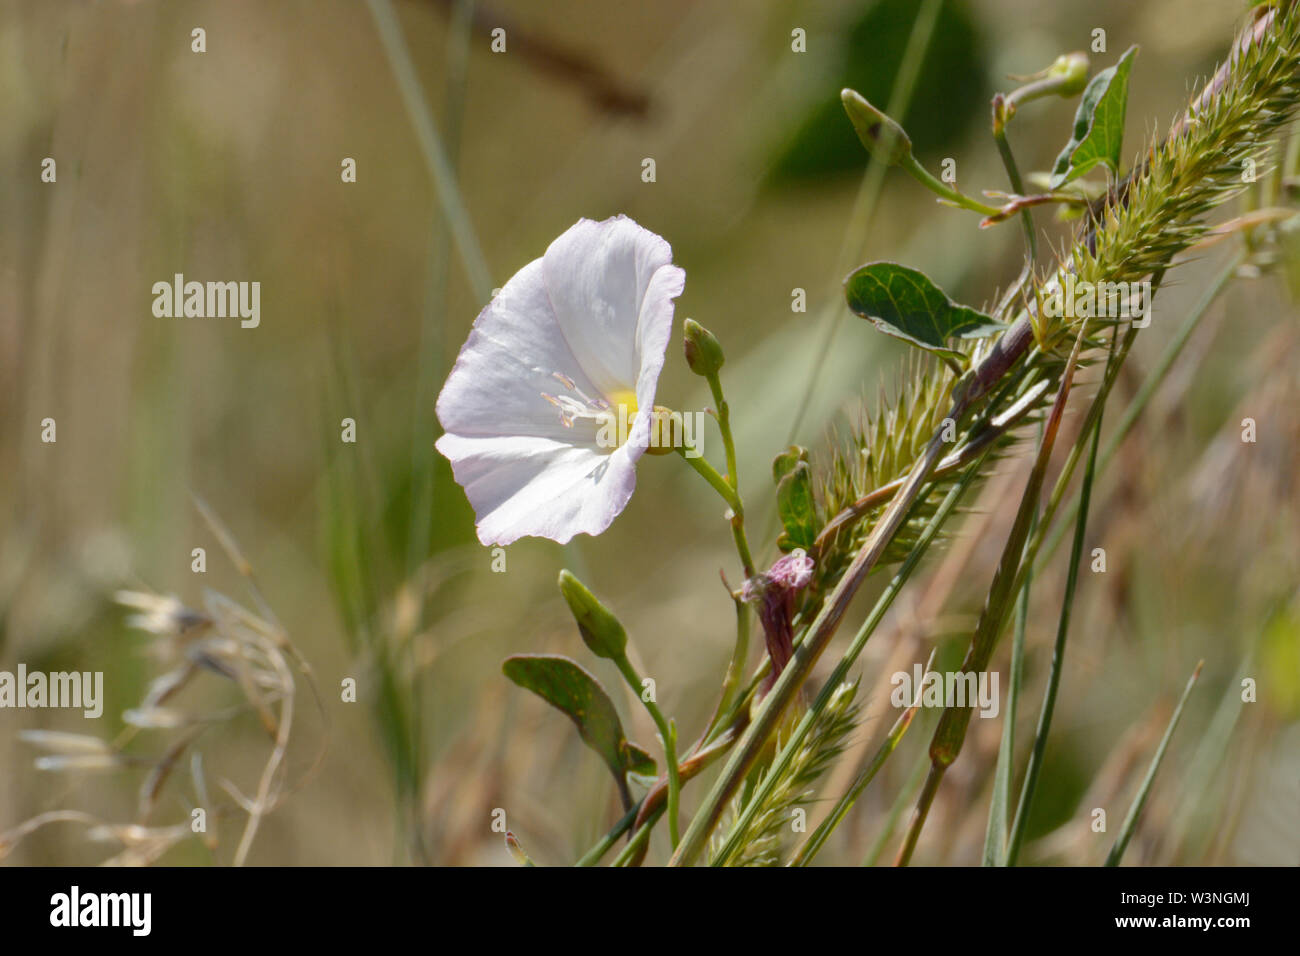 White field bindweed or convolvulus arvensis flower growing in prairie grasses Stock Photo